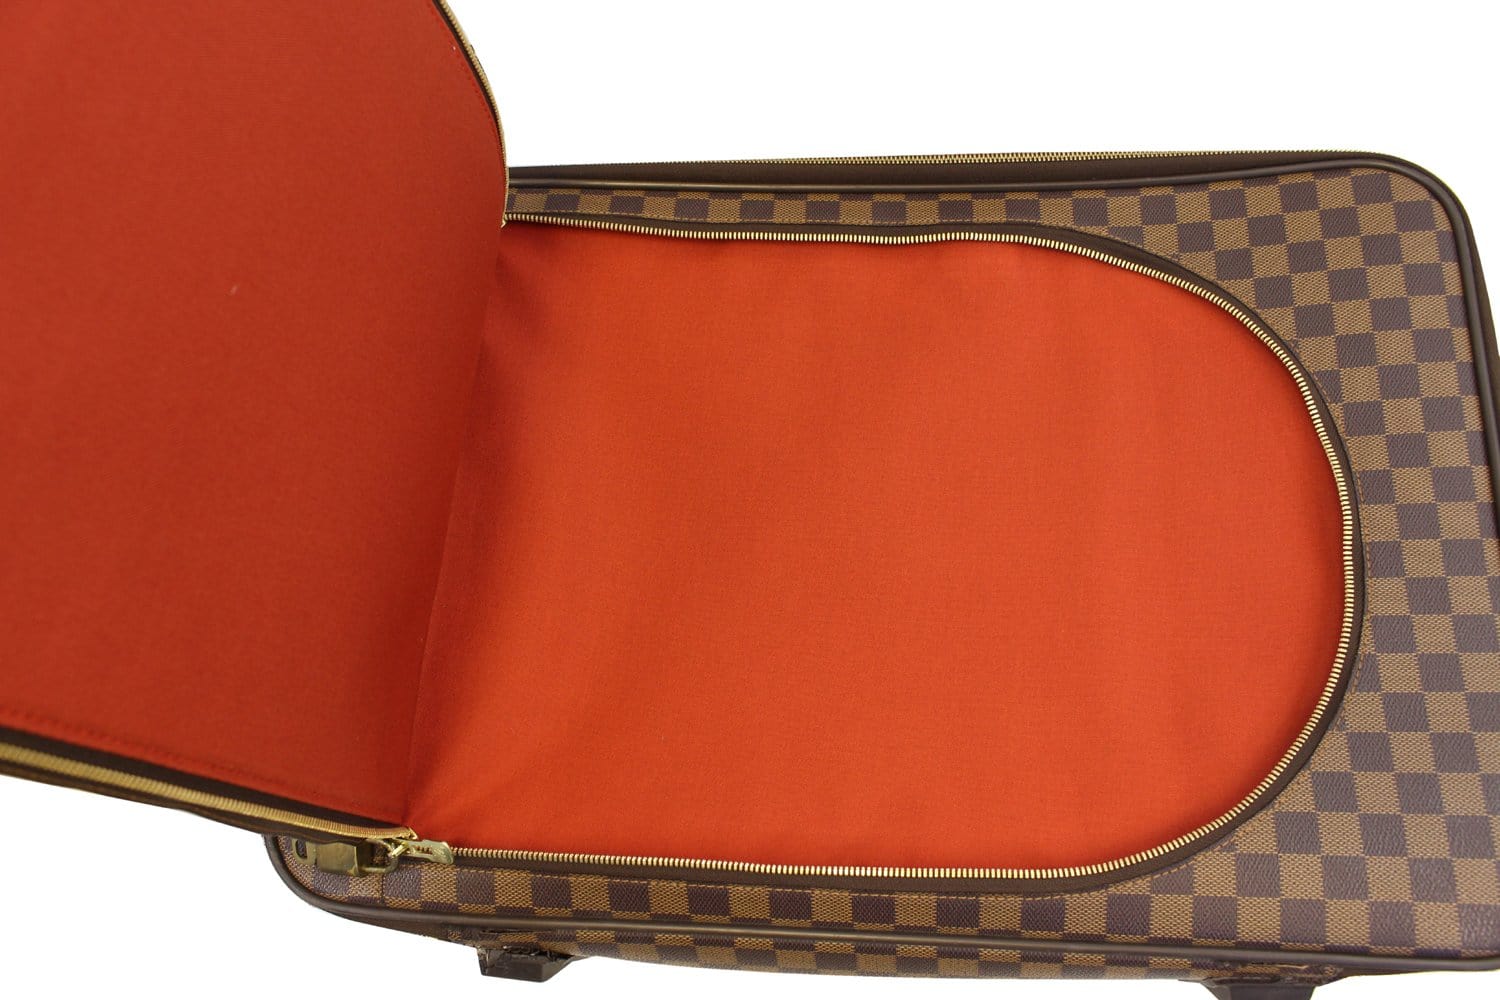 Louis Vuitton Damier Ebene Pegase #55 Carry On Luggage – Perry's